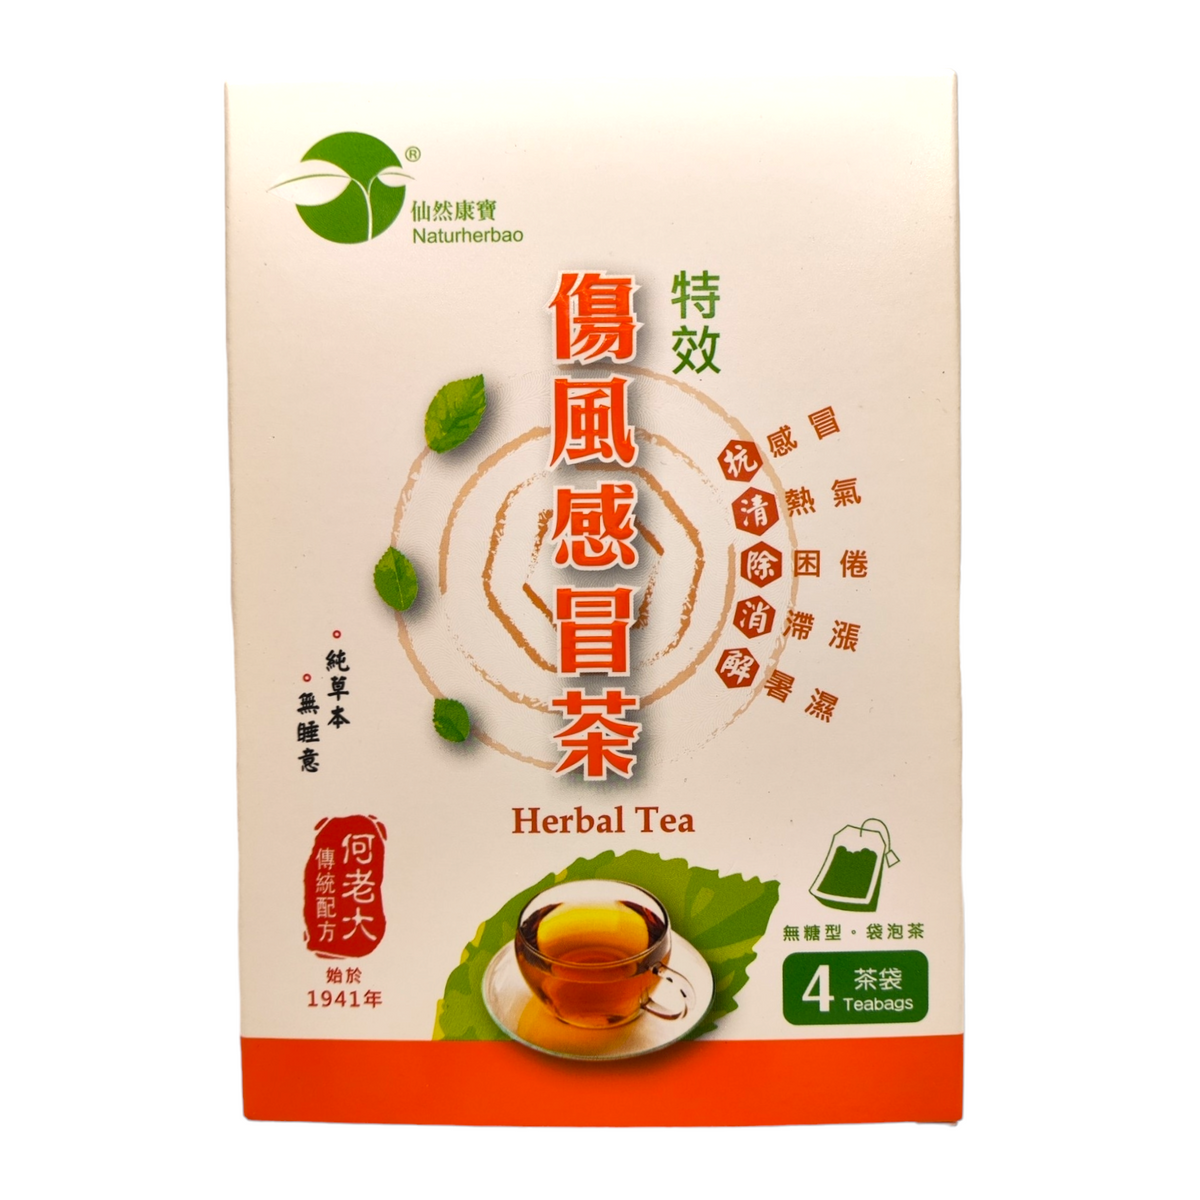 Hongkong Naturherbao Herbal Tea 4 teabags for Flu Cold Digestion